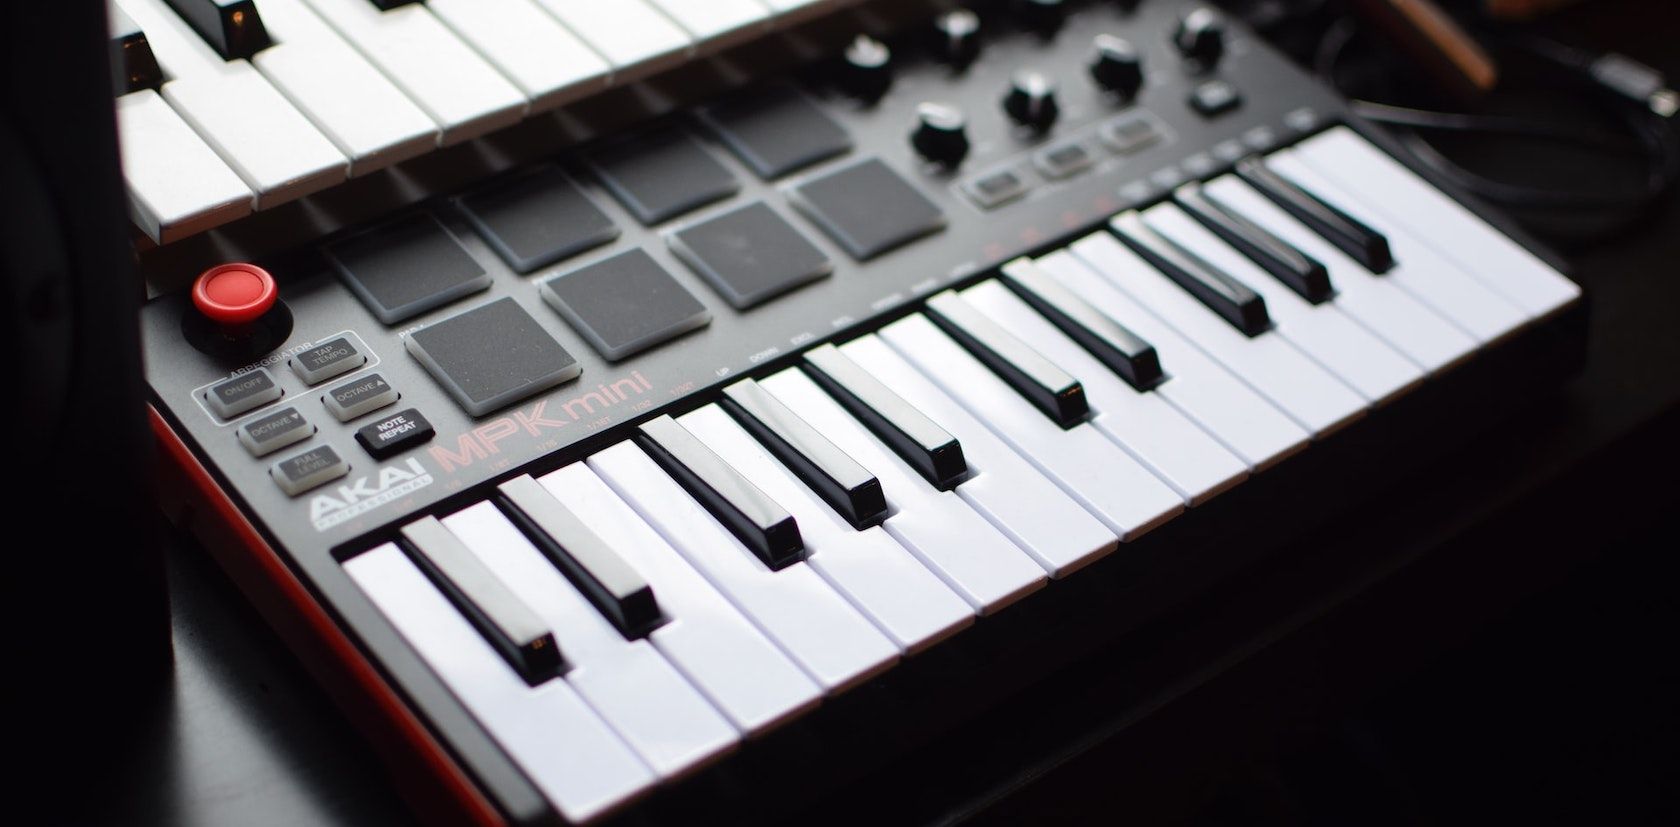 A close up image of the mpk mini MIDI keyboard by Akai.